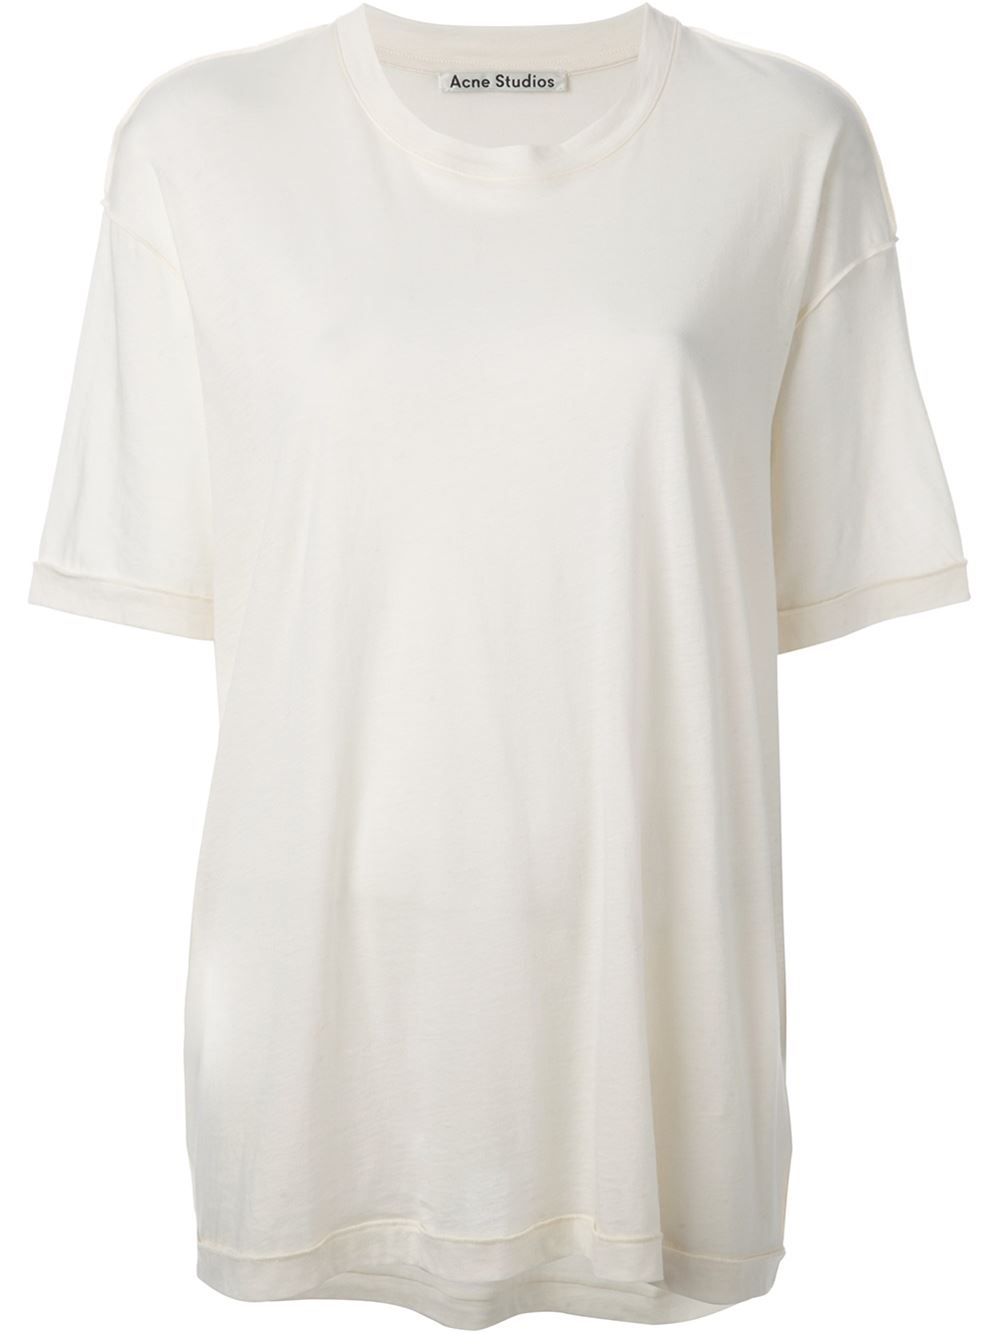 Lyst - Acne Studios 'Visage' T-Shirt in White